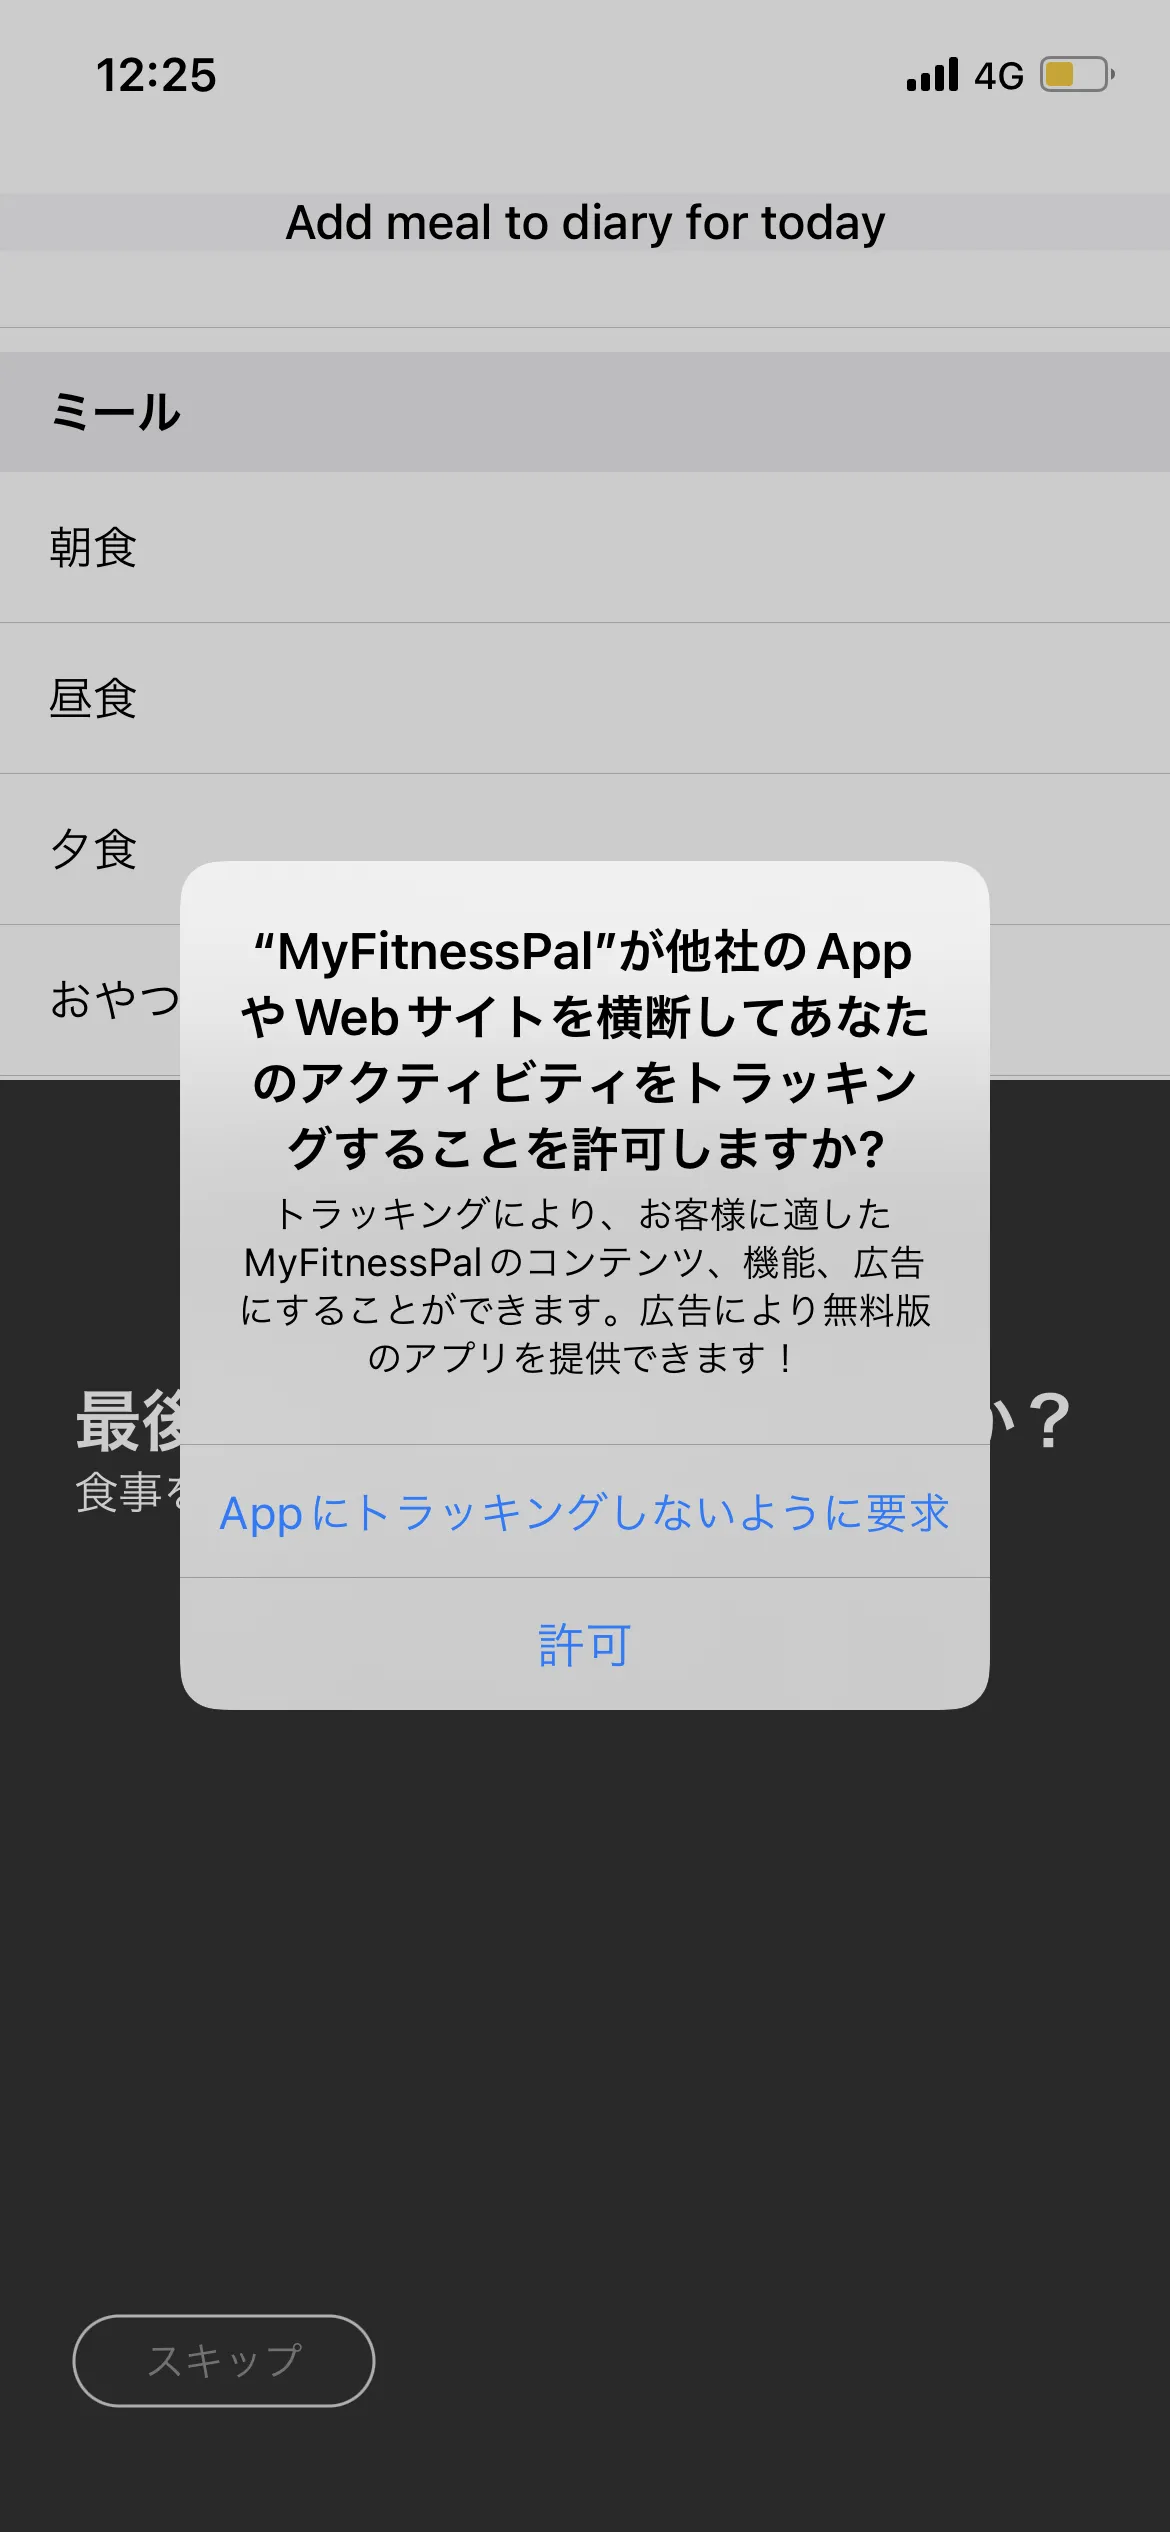 MyFitnessPal オンボーディング screen